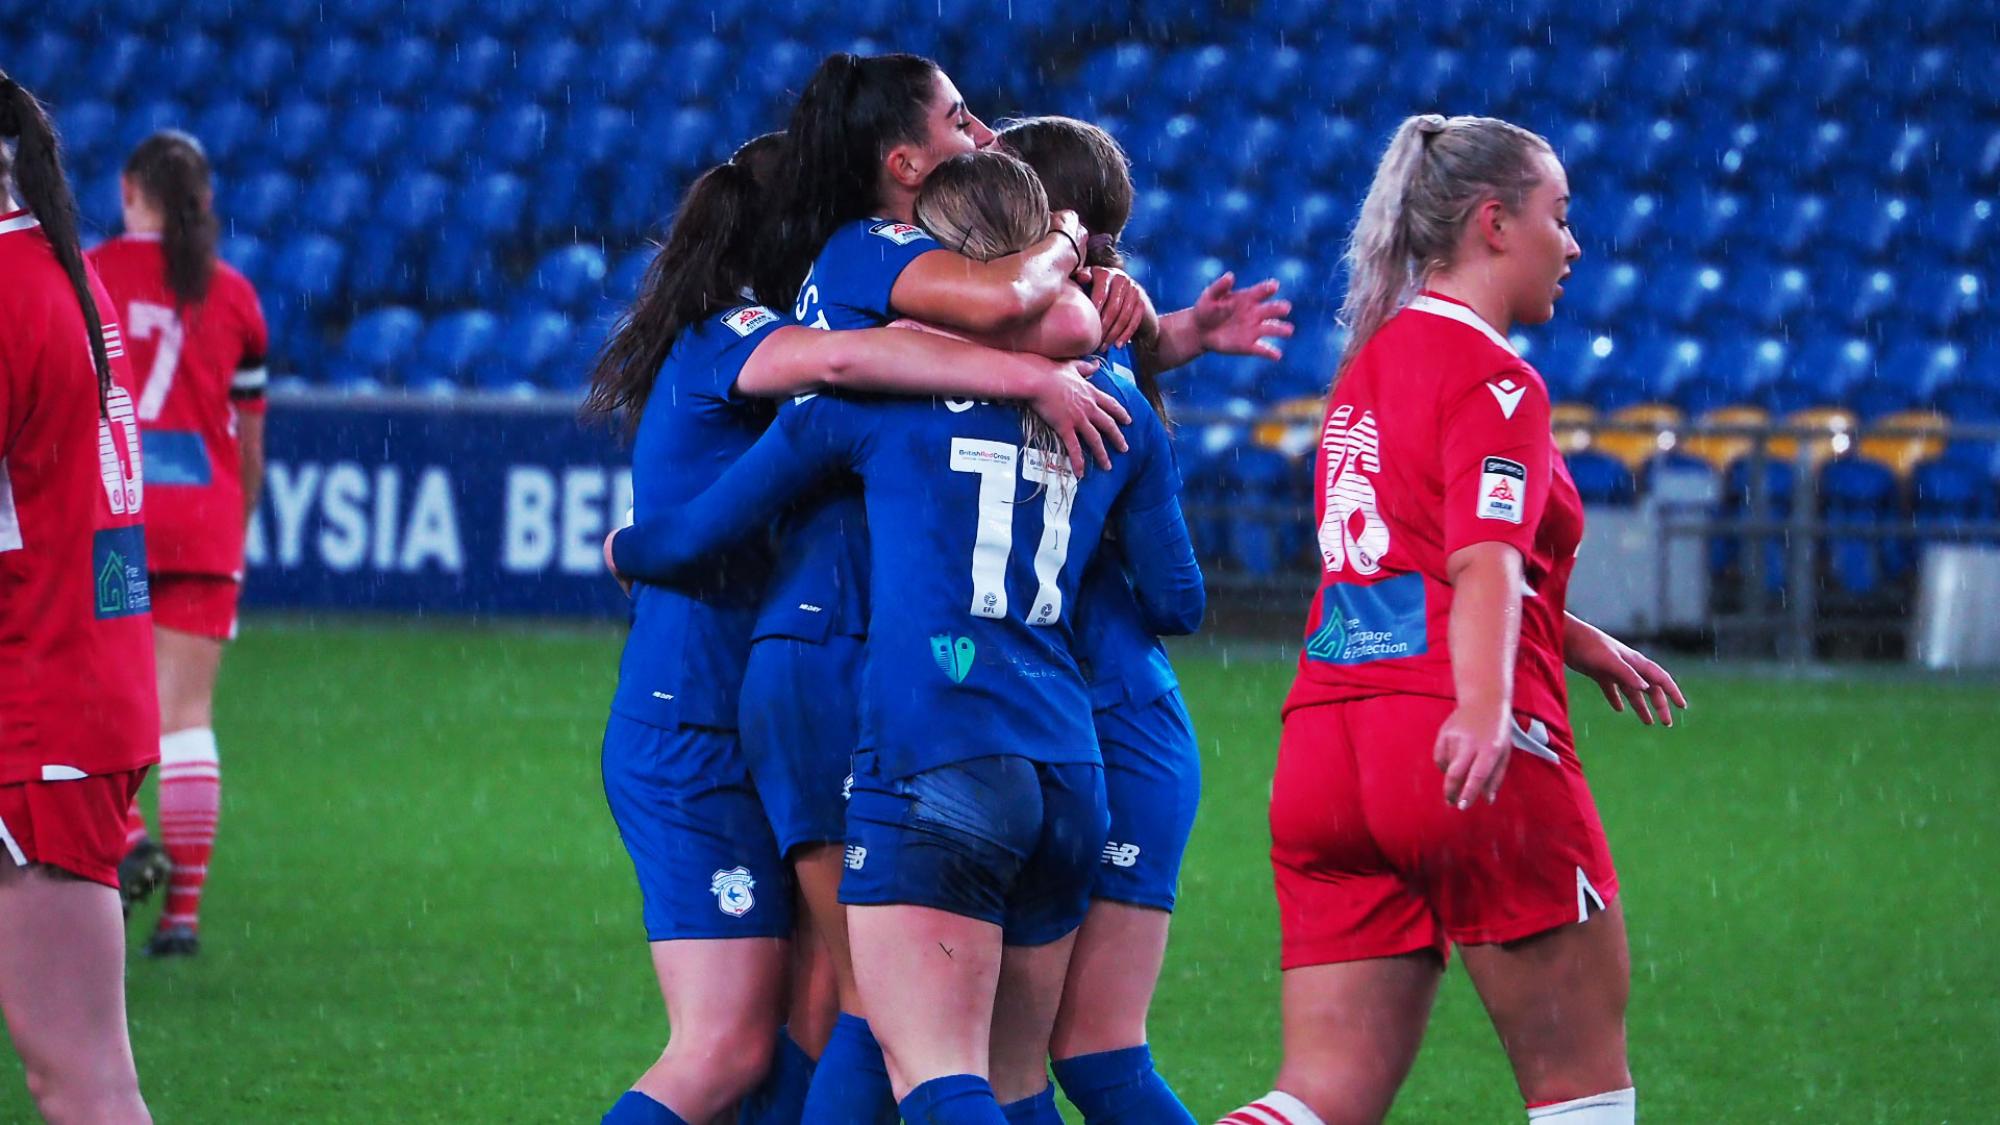 Cardiff thắng 9-0 trước Abergavenny